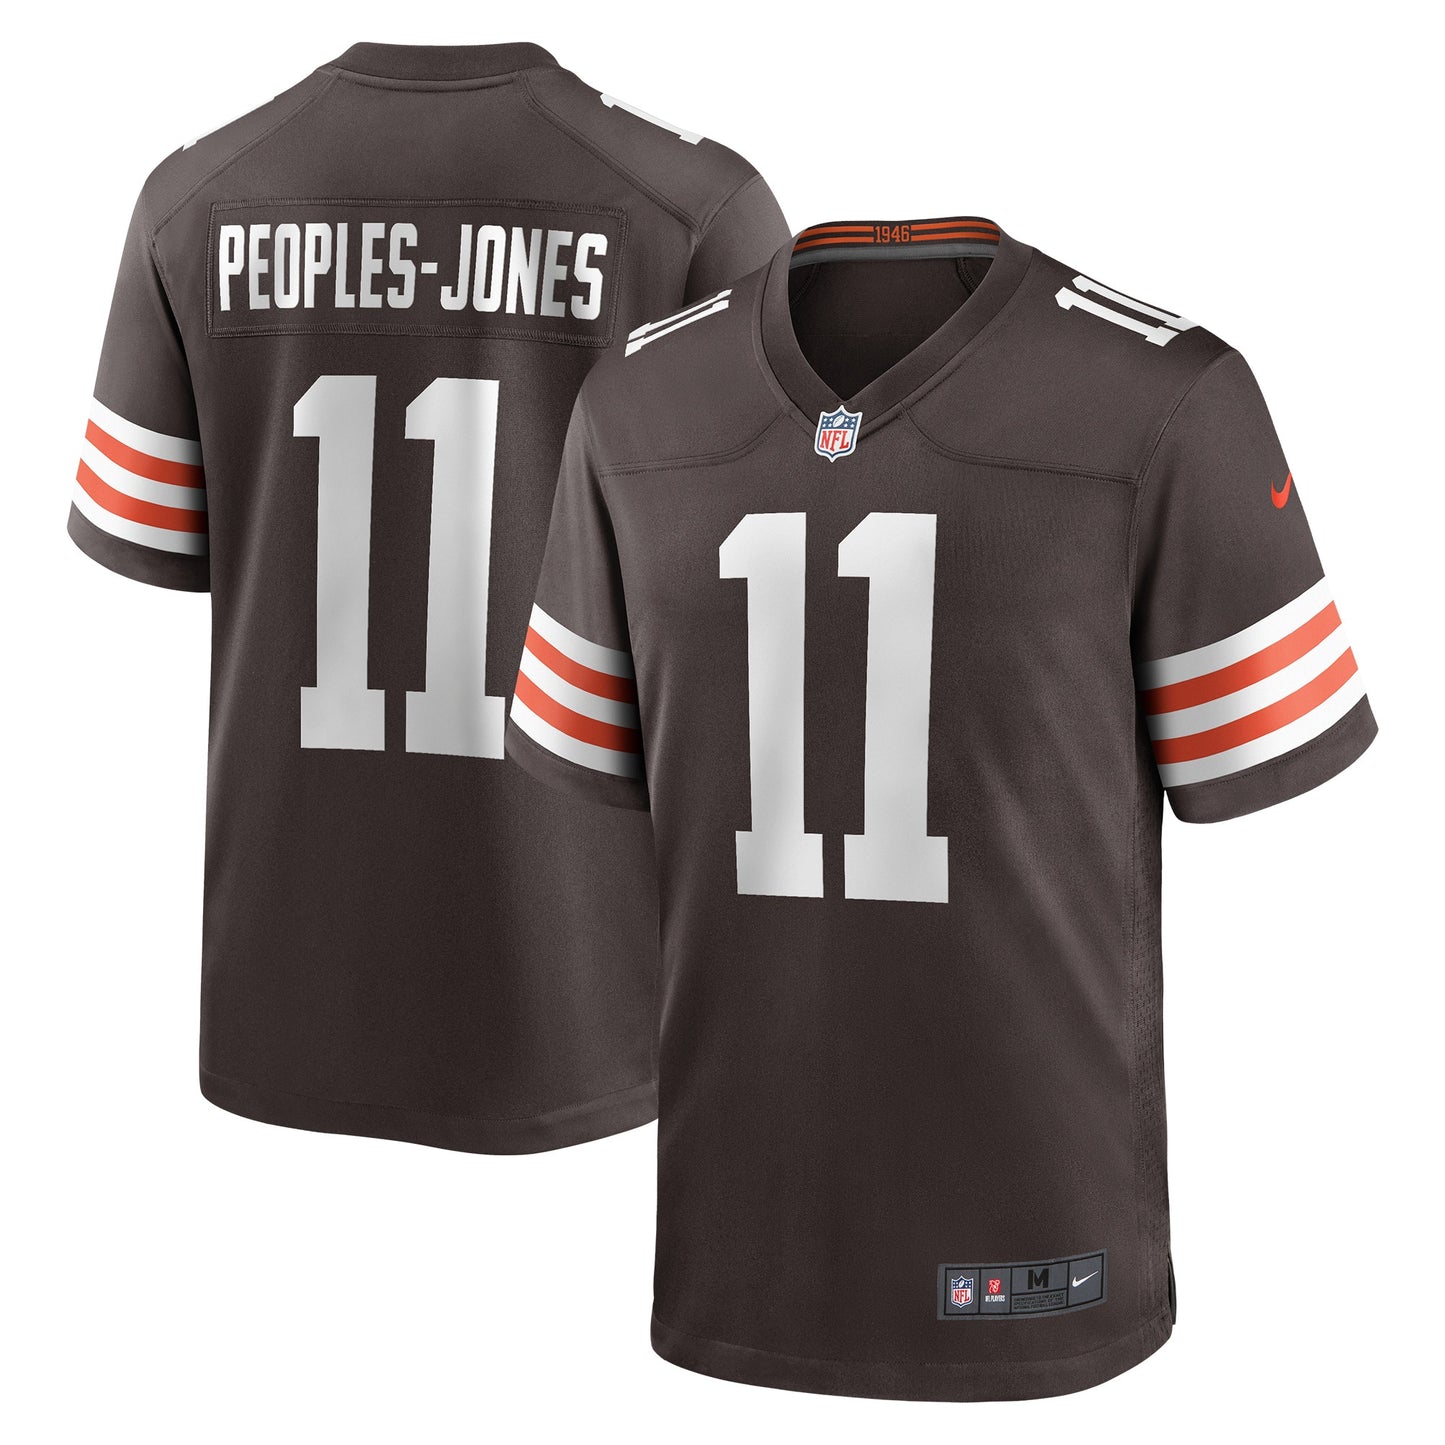 Donovan Peoples-Jones Cleveland Browns Nike Game Jersey - Brown